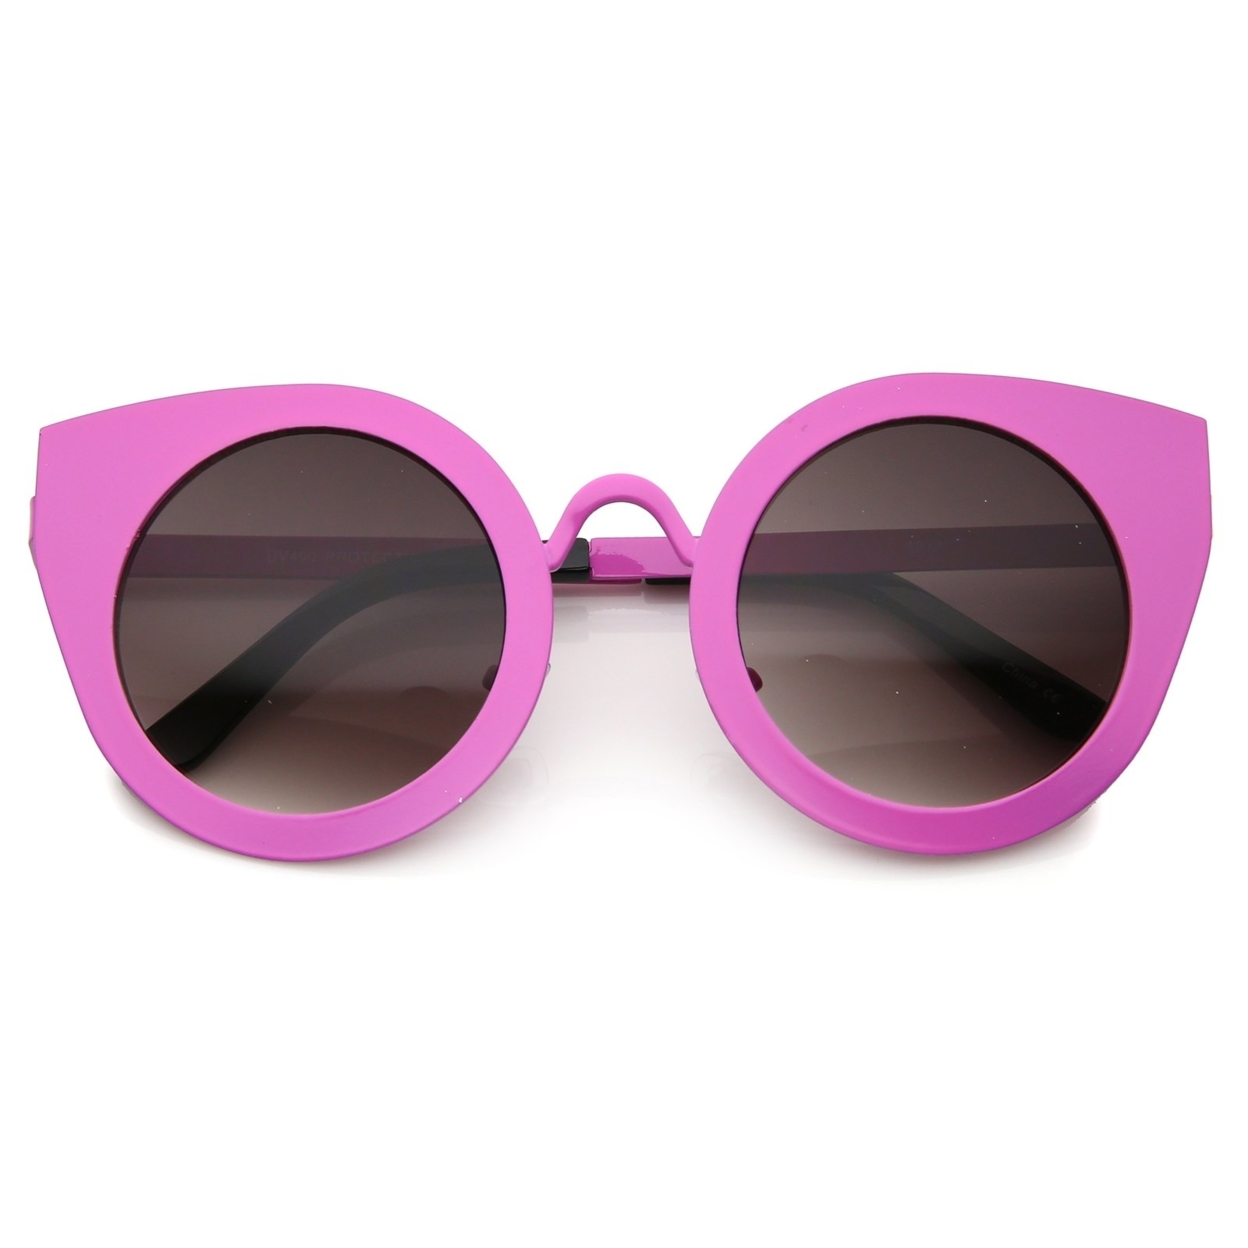 Women's Metal Frame Oversize Round Cat Eye Sunglasses 47mm - Hot Pink / Lavender